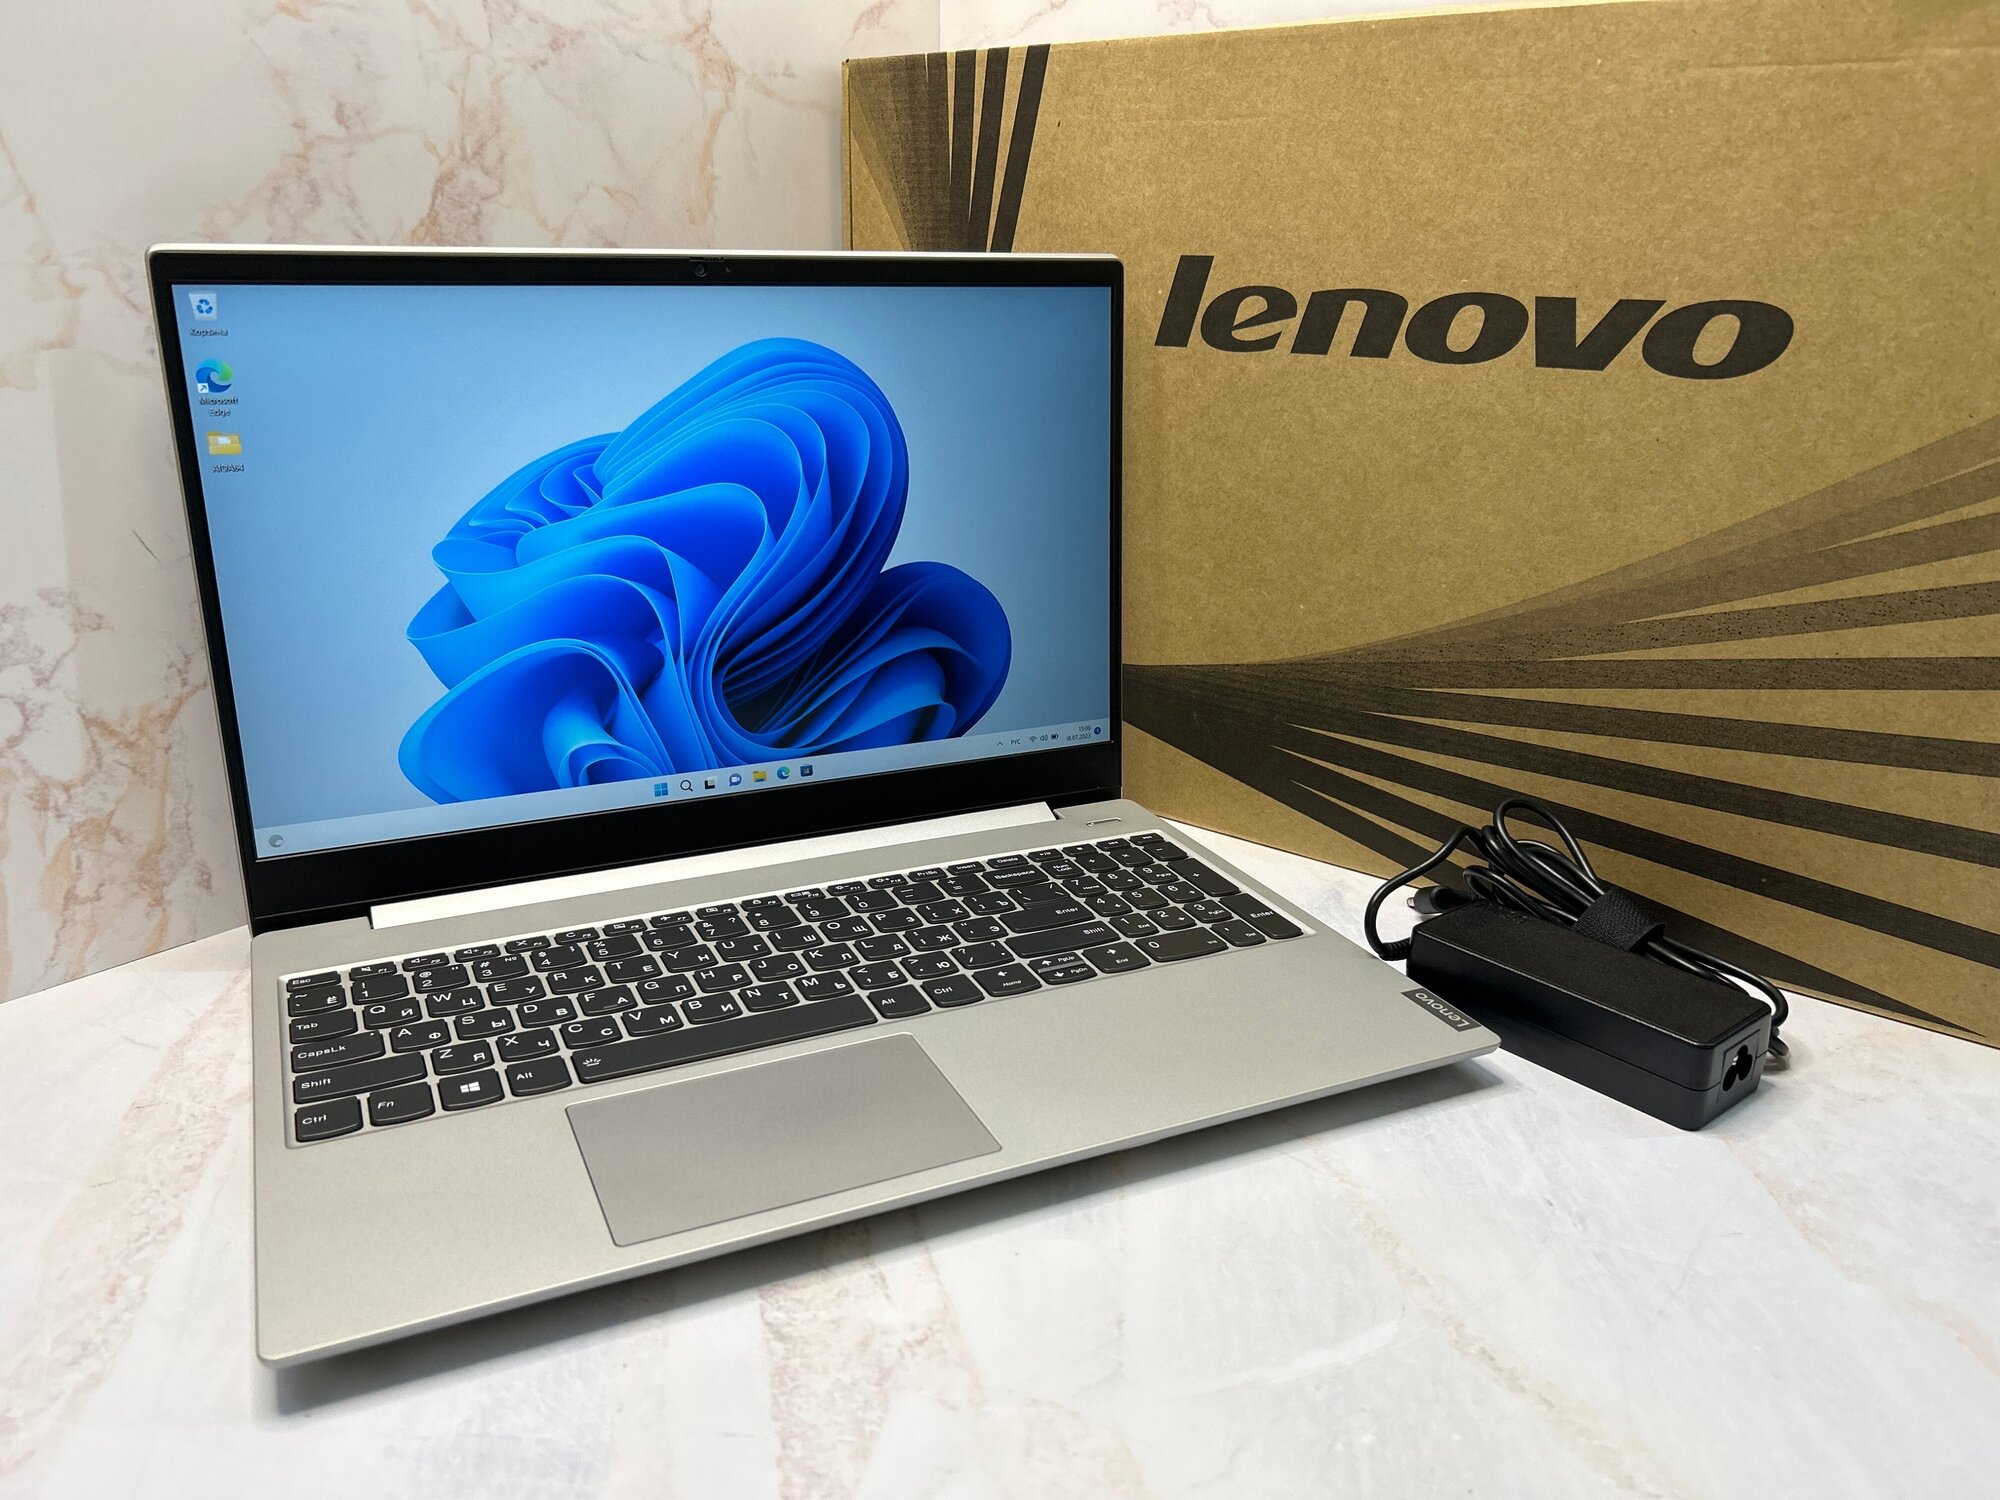 Ноутбук Lenovo Ideapad S340-15API. Конфигурация: Ryzen 5 3500U/8GB/256GB/Vega 8/Win11/FHD